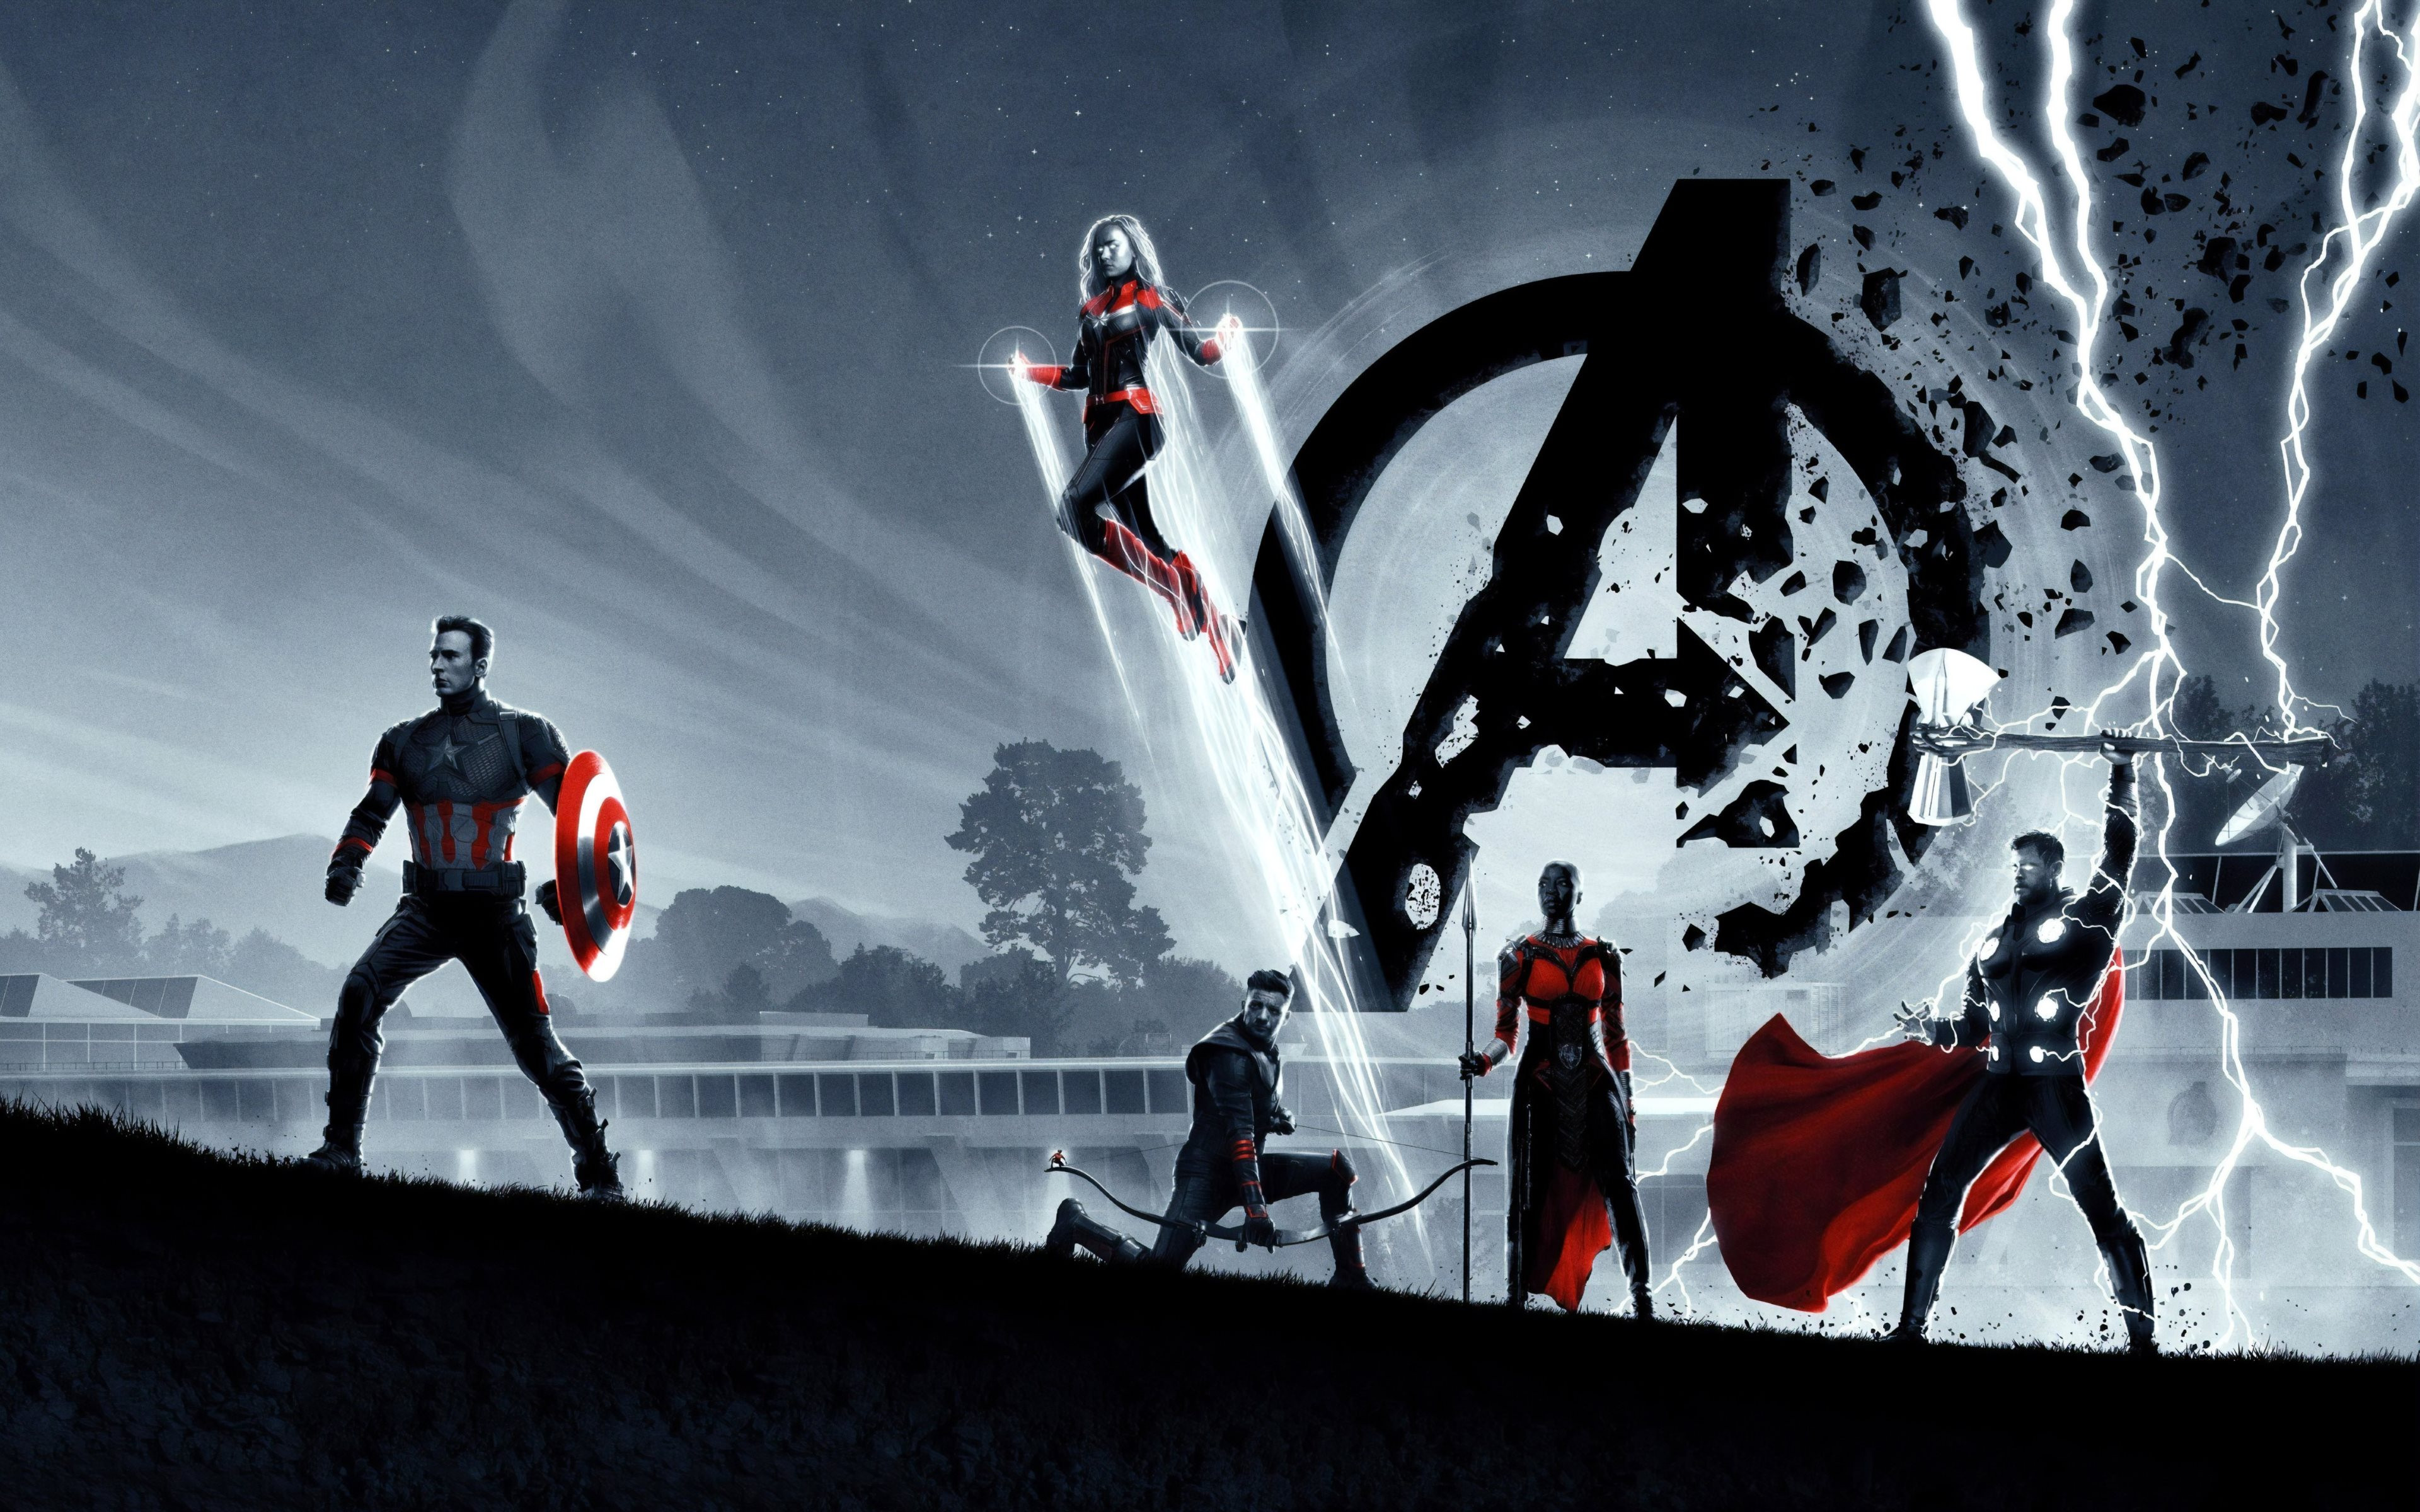 Avengers Endgame Poster Image Wallpapers